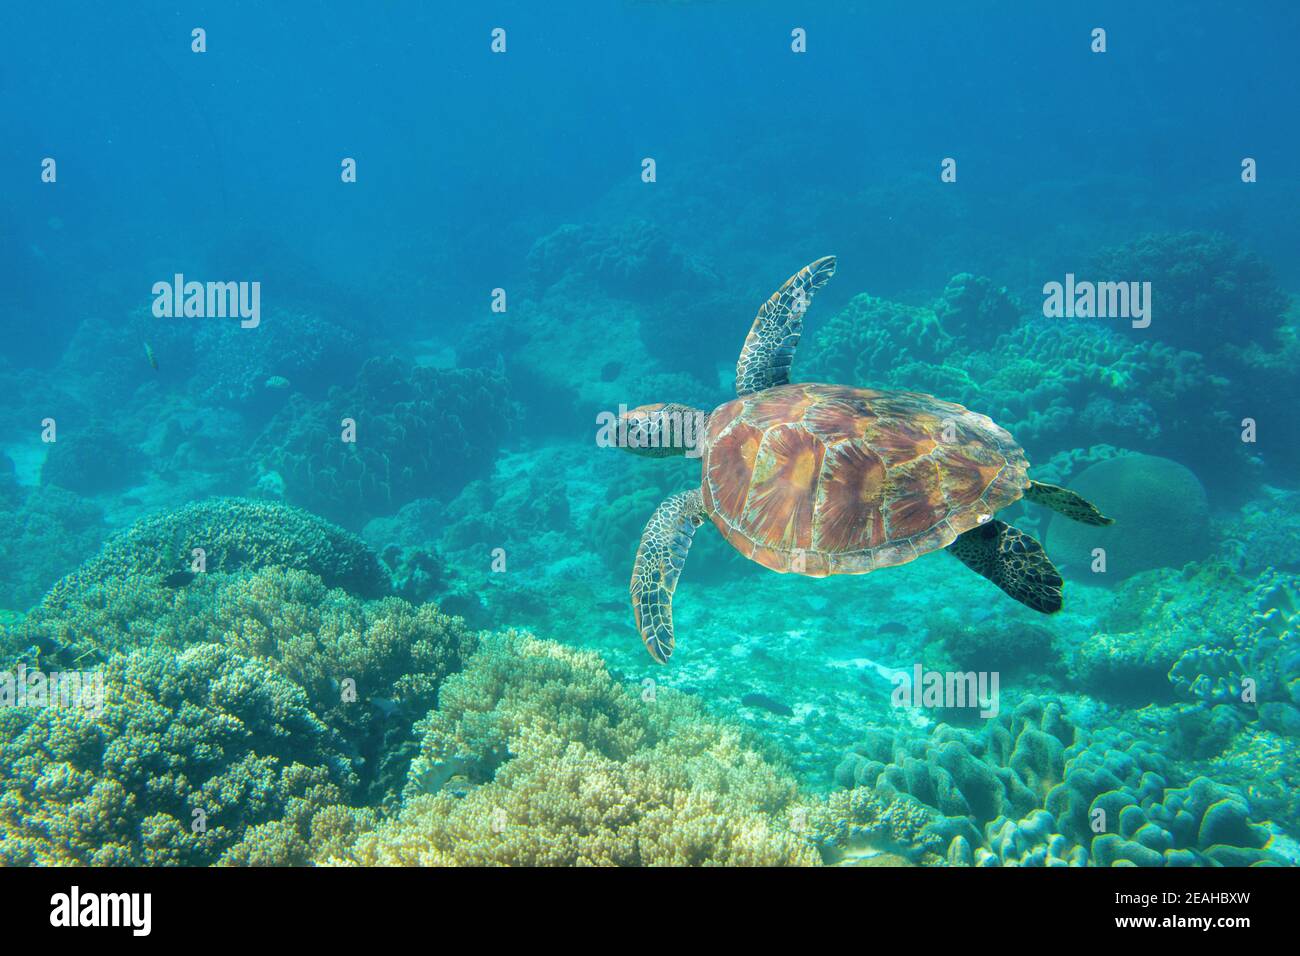 Sea turtle in blue water, underwater coral reef photo. Cute sea turtle in blue water of tropical sea. Green turtle underwater photo. Wild marine anima Stock Photo